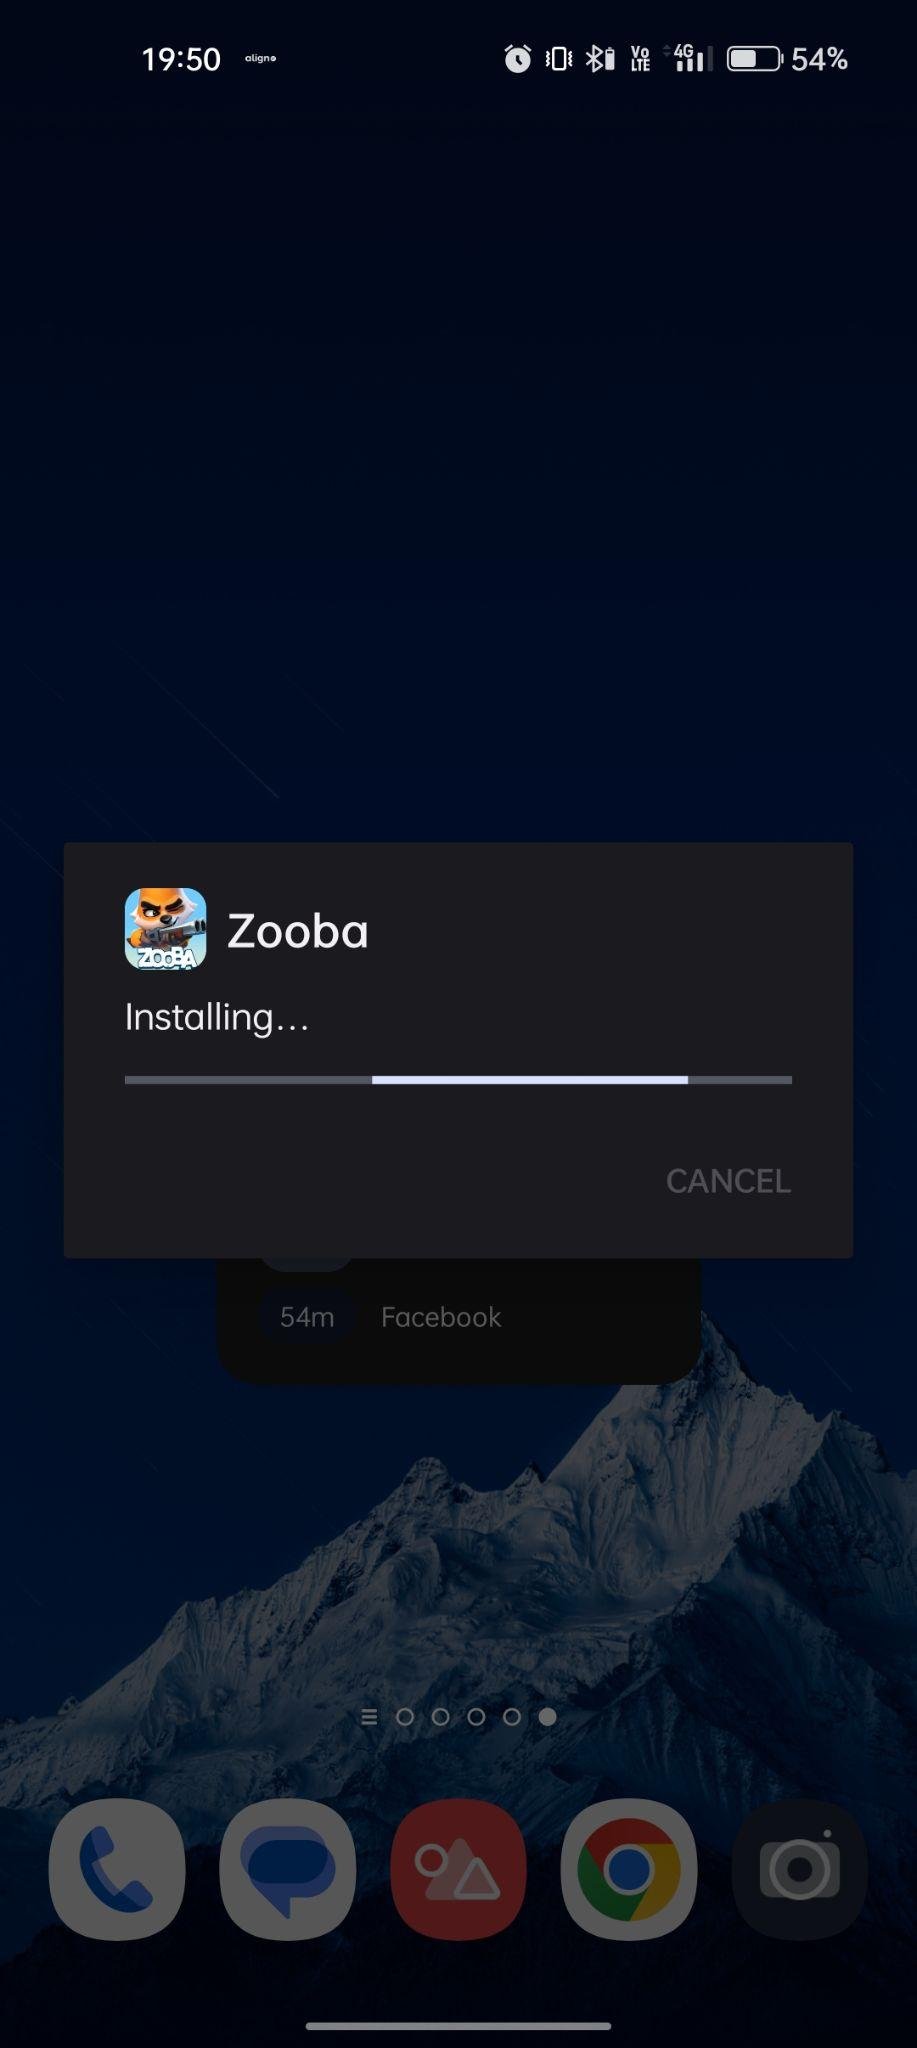 Zooba apk installing